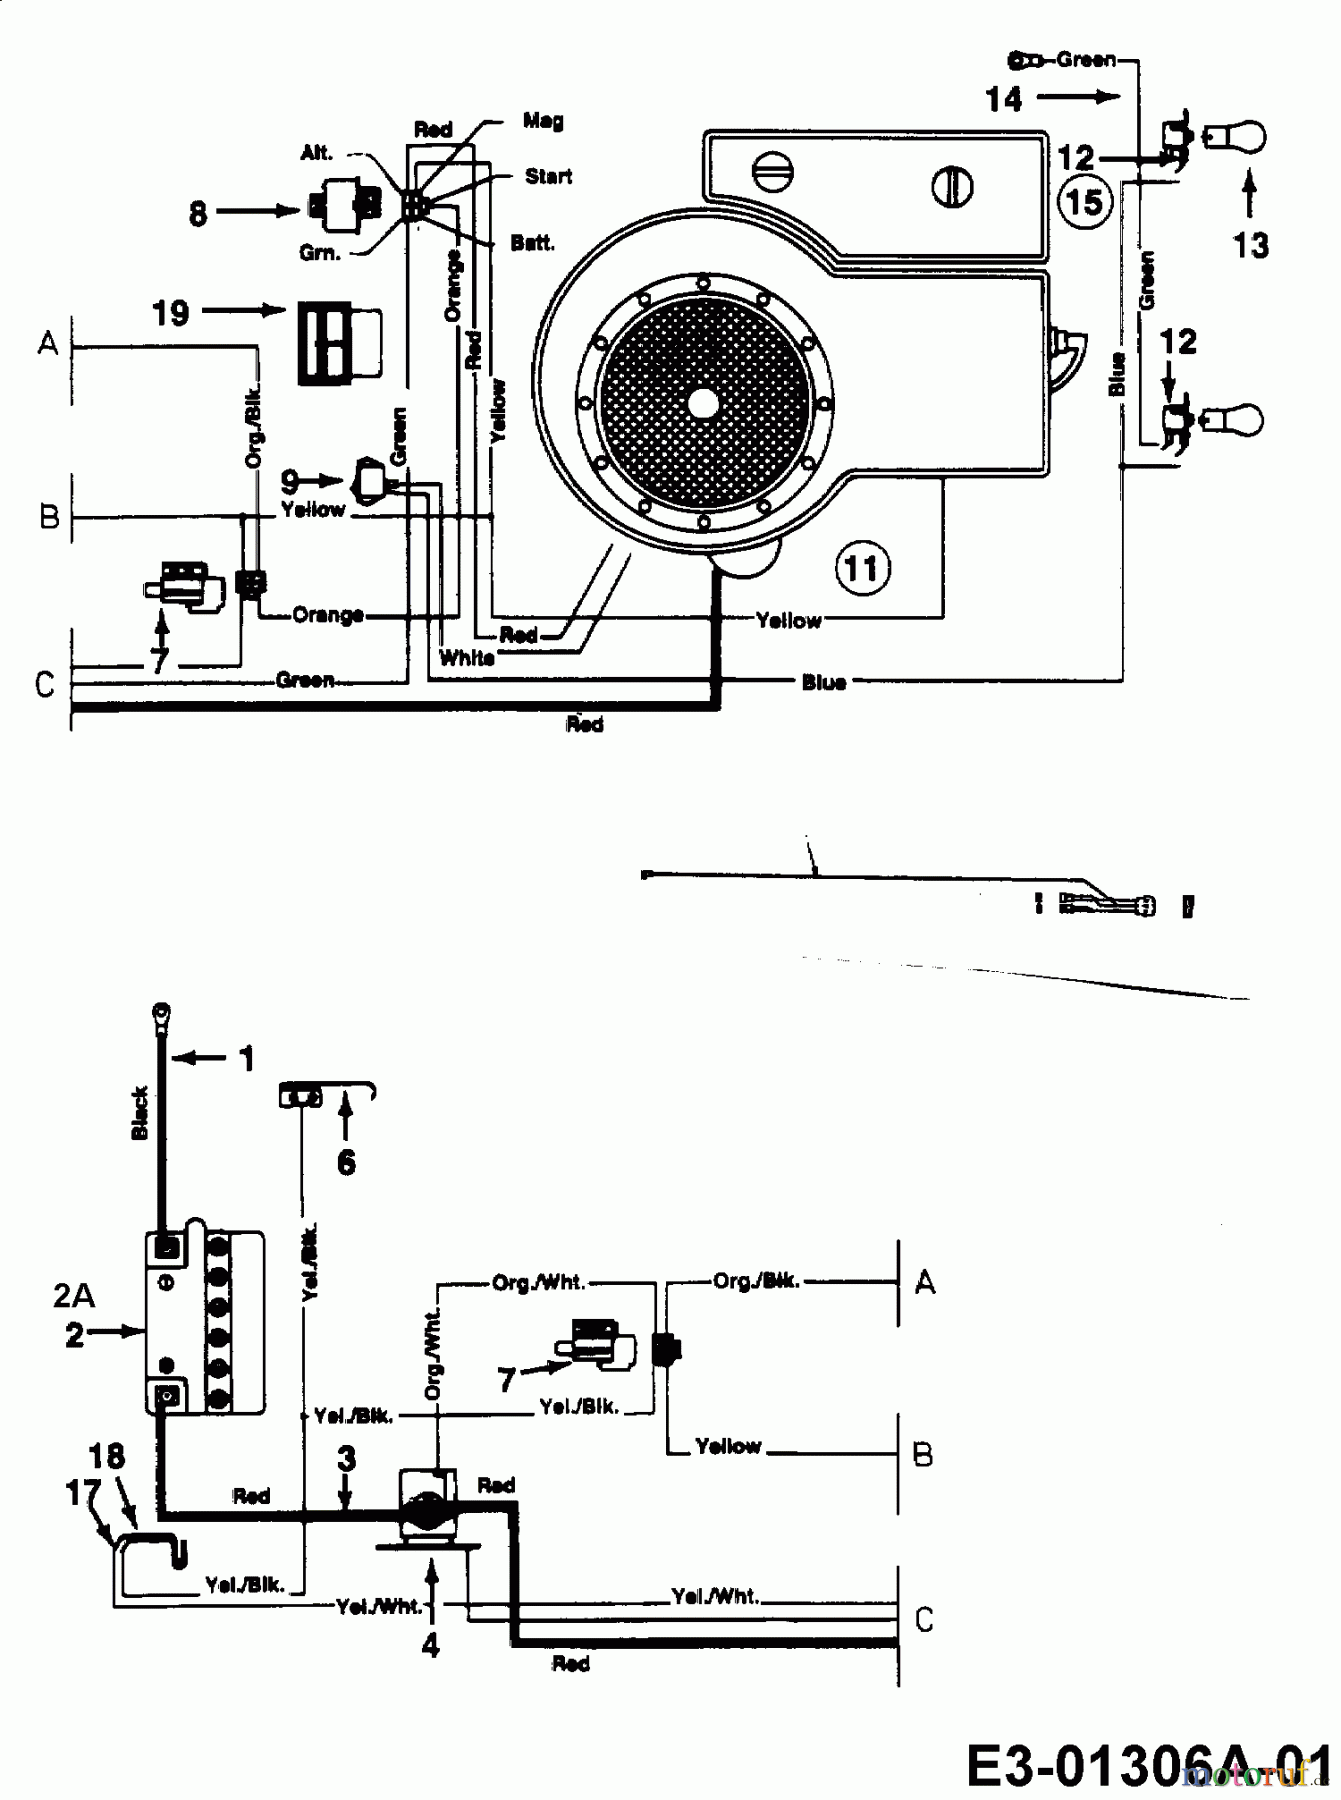  Fleurelle Lawn tractors AMH 1200 13A1452C619  (2003) Wiring diagram single cylinder